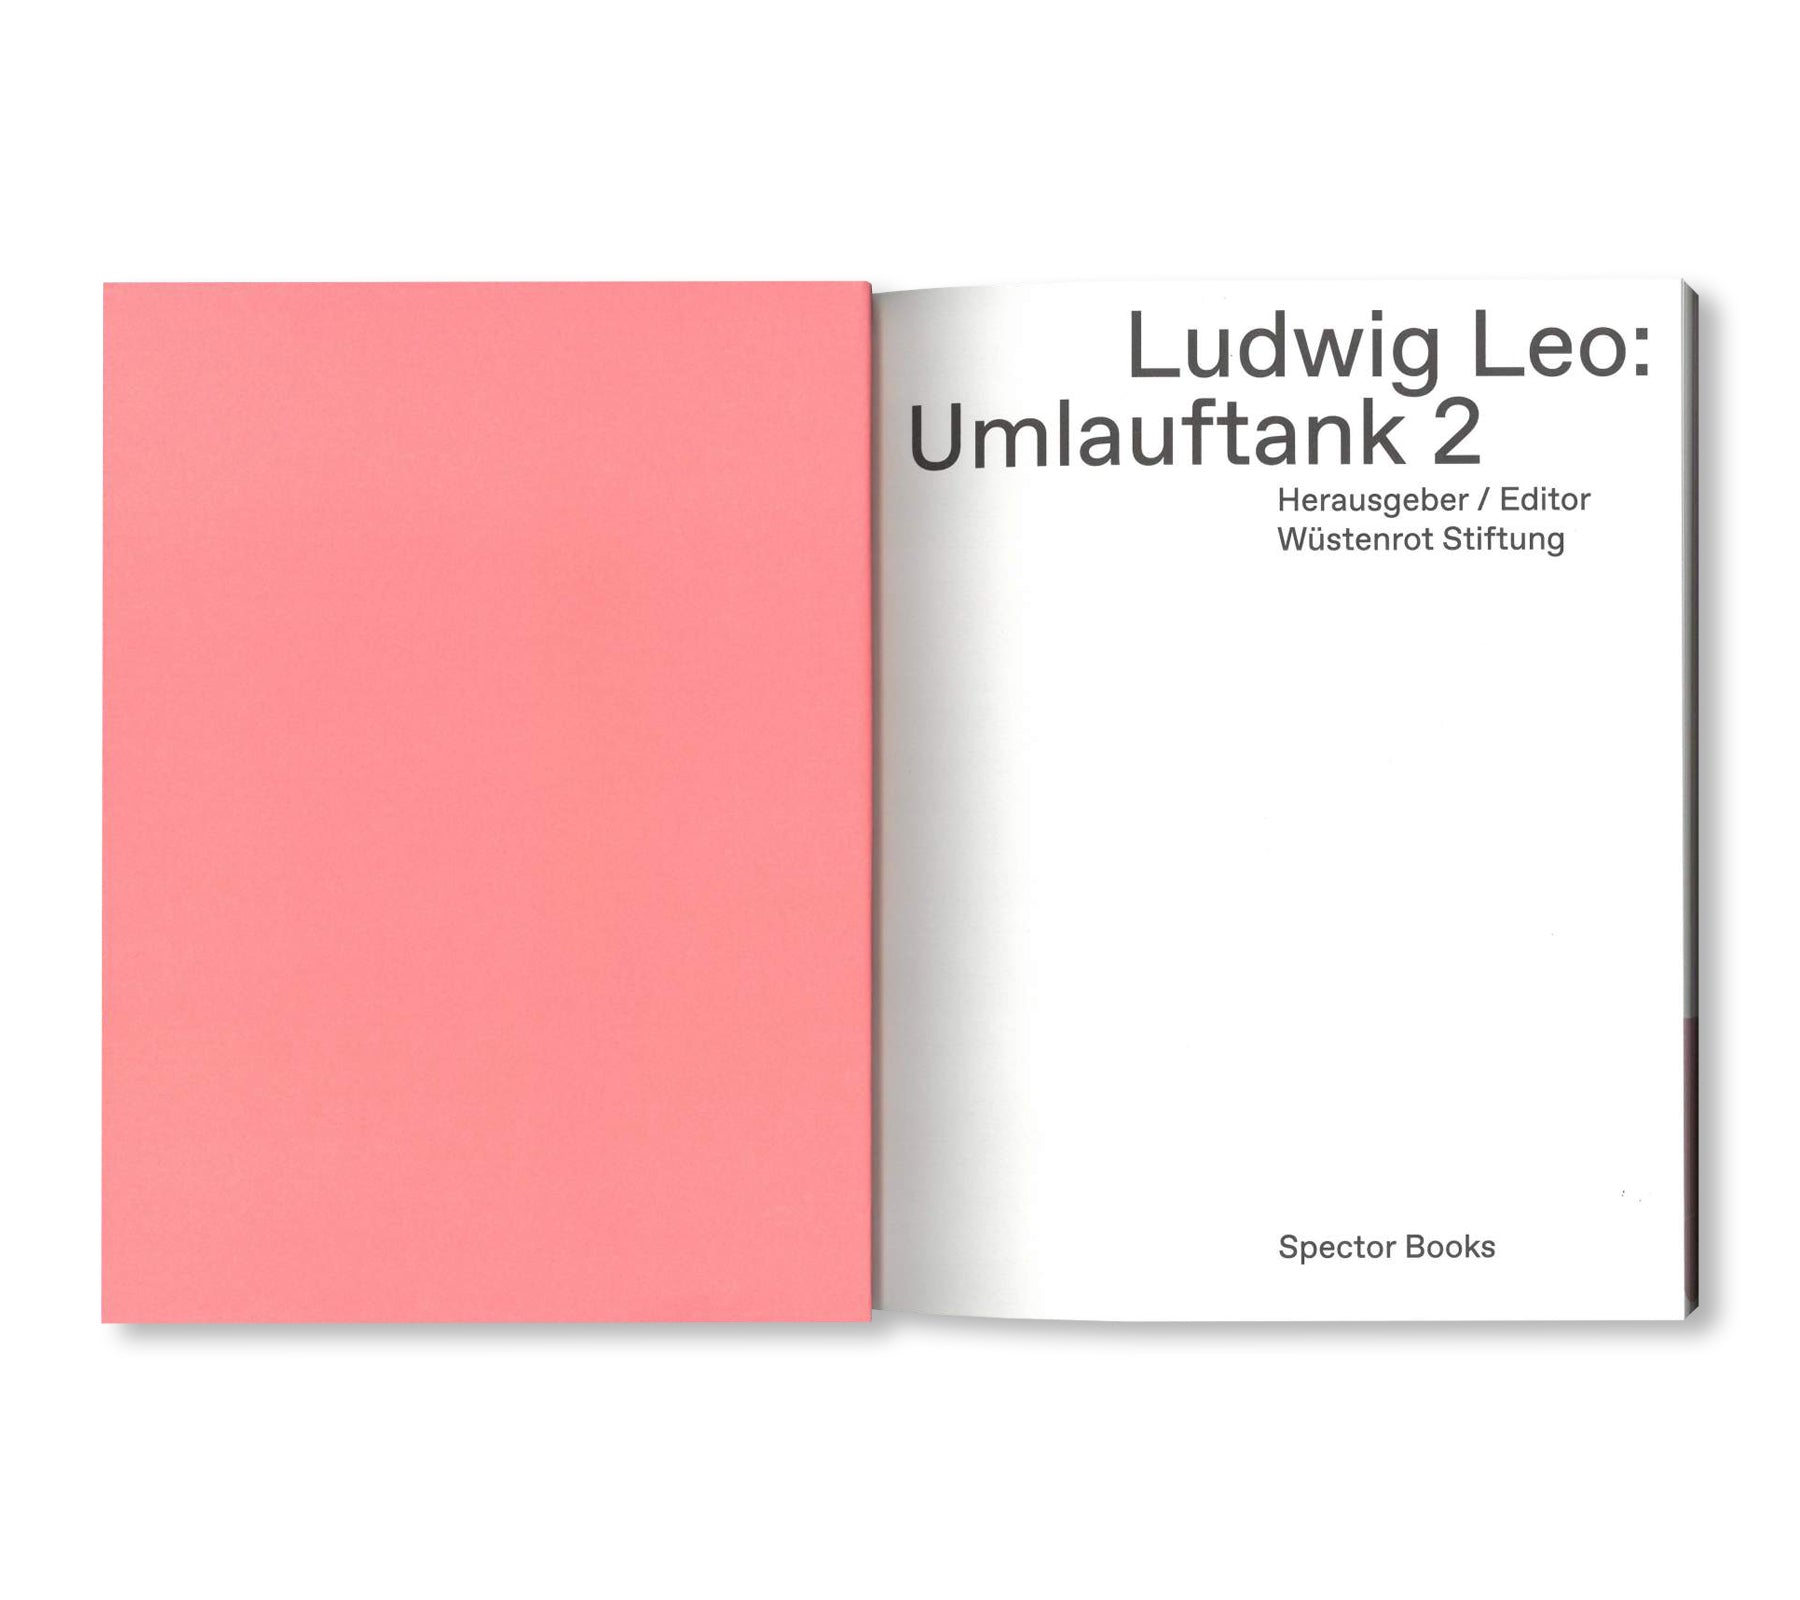 LUDWIG LEO: CIRCULATION TANK 2 by Ludwig Leo